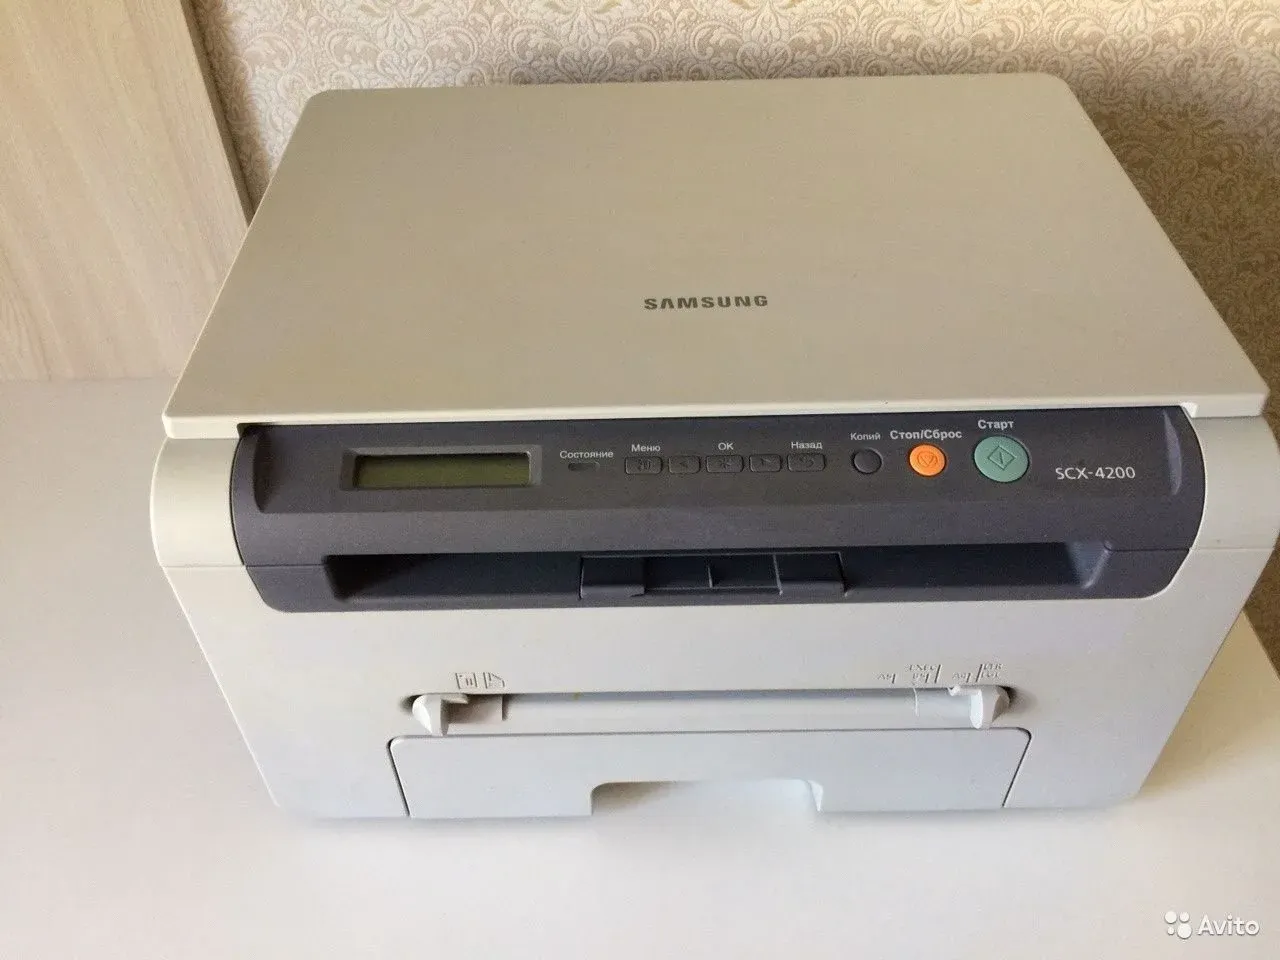 Samsung series 4200. Samsung SCX 4200. Принтер Samsung SCX-4200. Принтер самсунг 4200. Принтер самсунг SCX 4200.